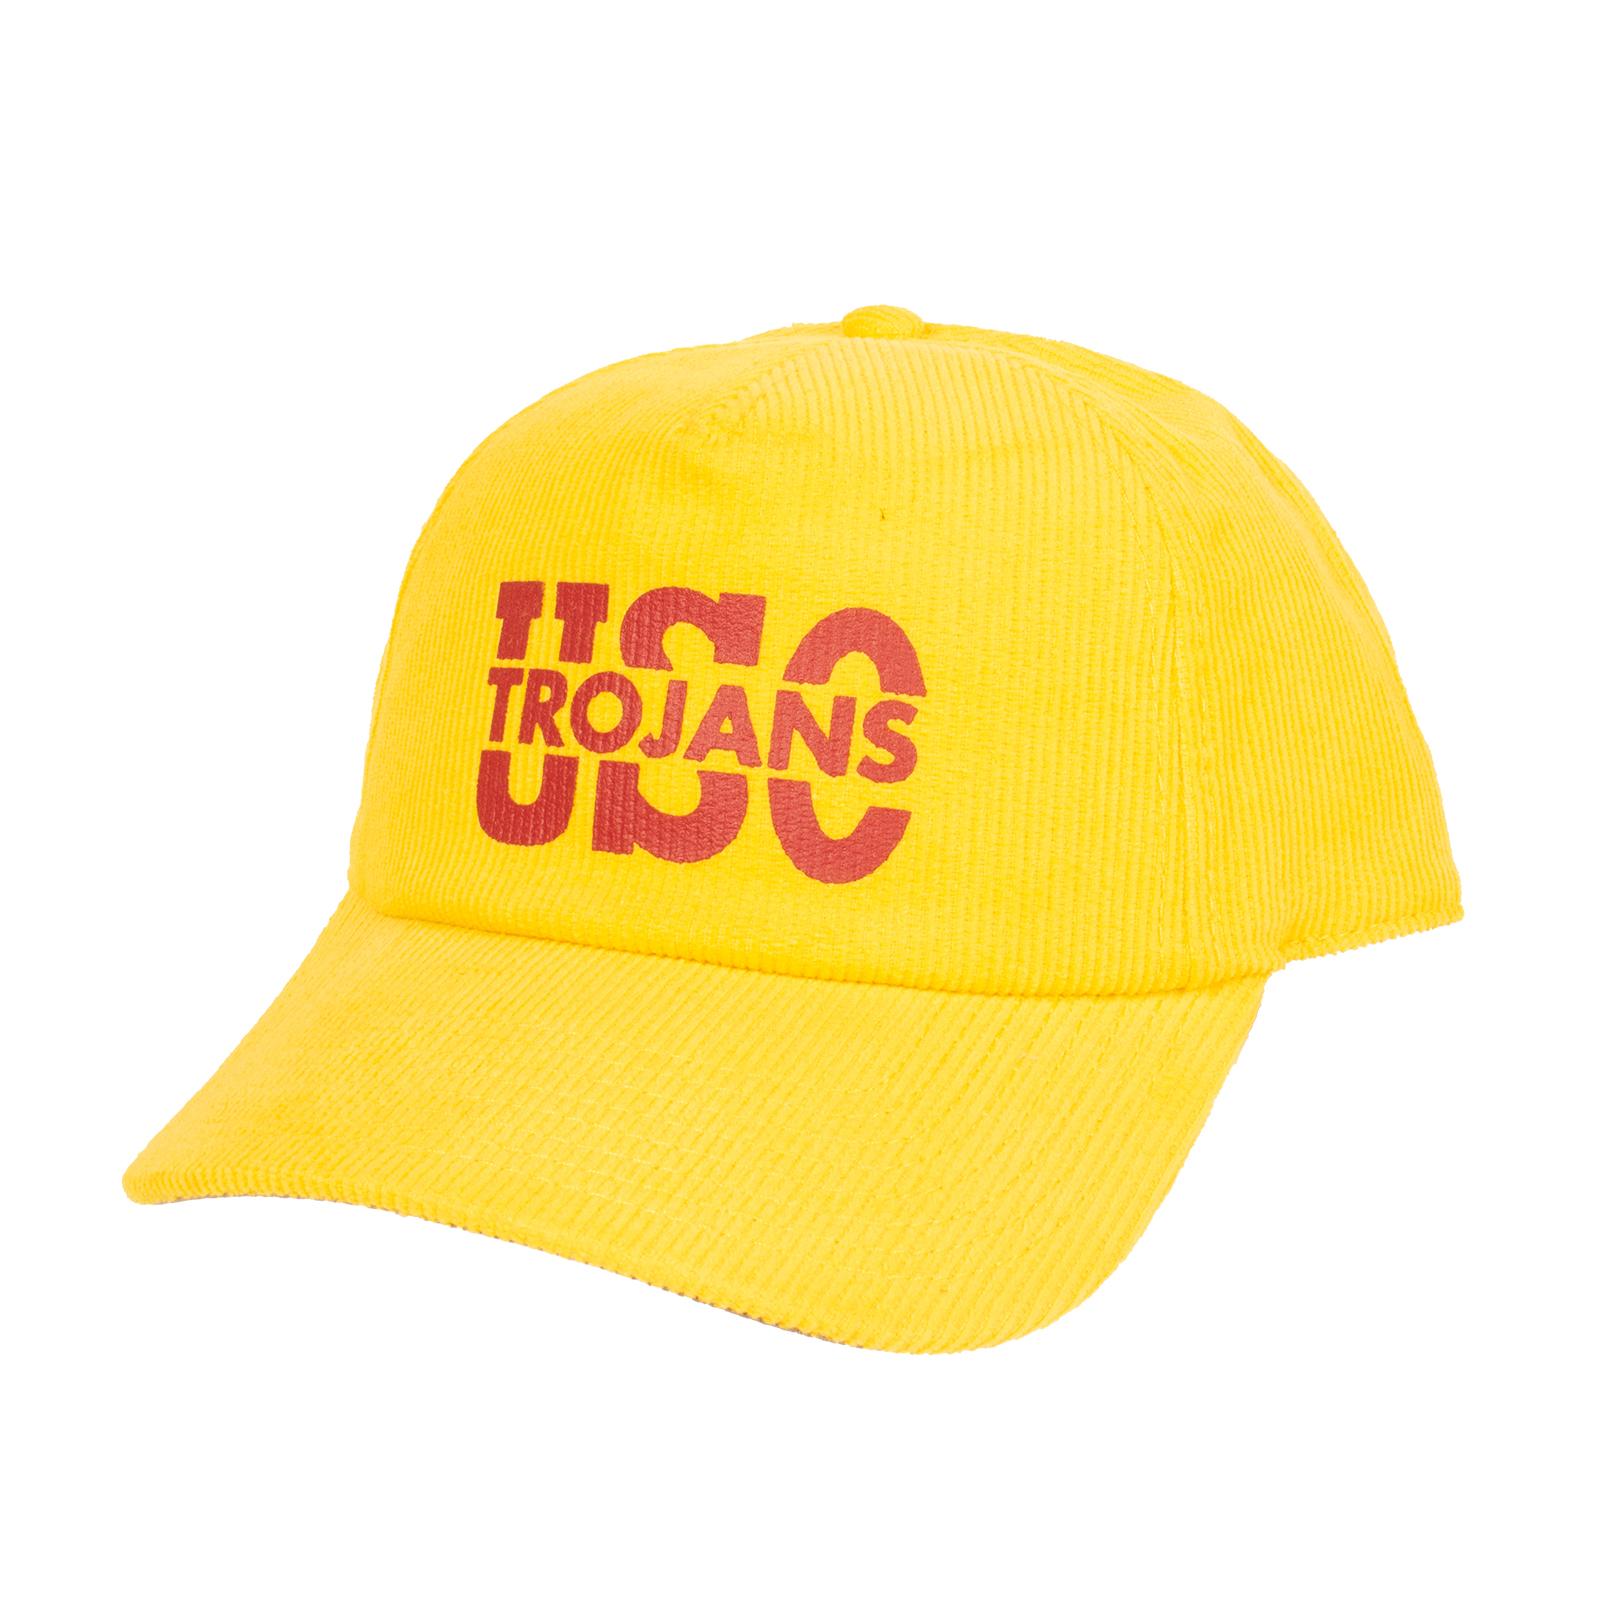 USC Trojans Unisex Corduroy Snap Back Hat Gold image01